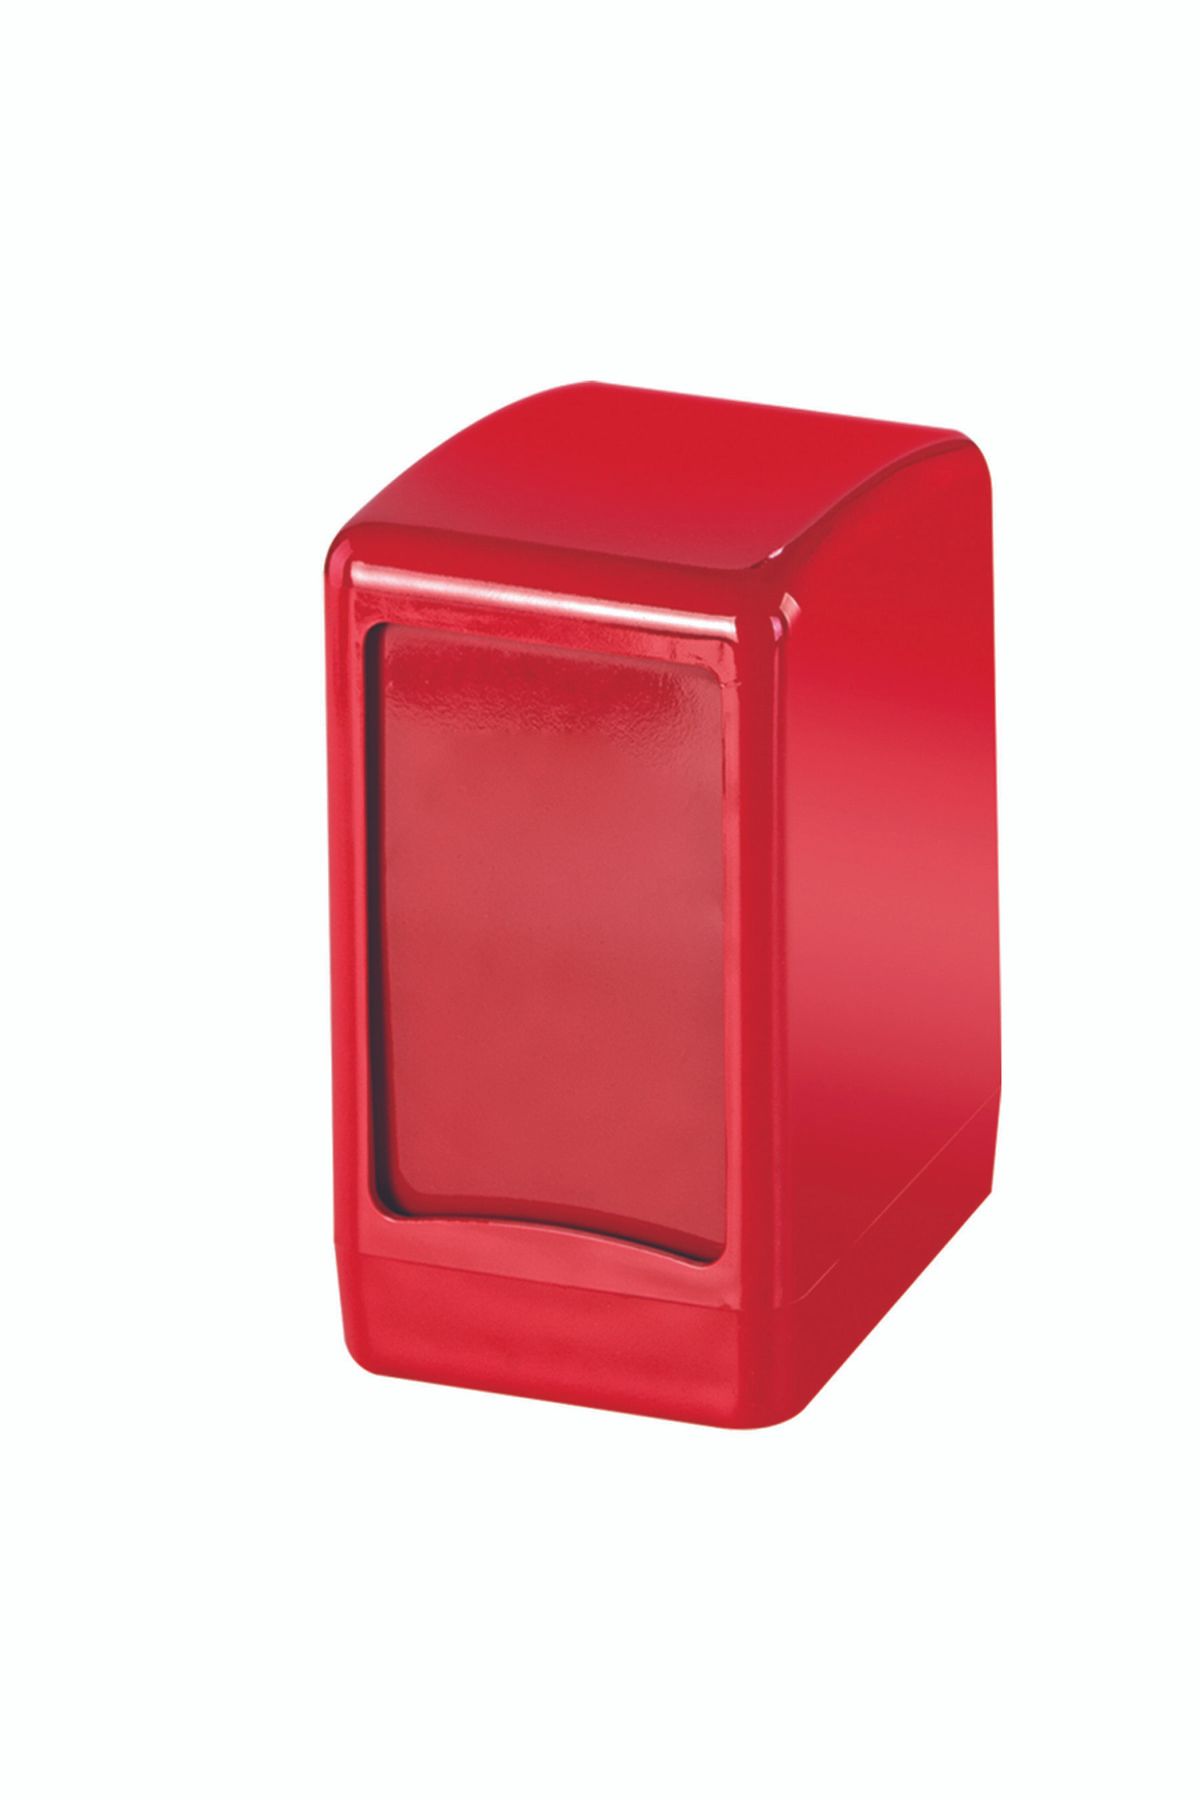 Palex (ün-ev) Masa Üstü Peçetelik (masa Üstü Peçete Dispenseri) (ağır) Kırmızı 3474-b